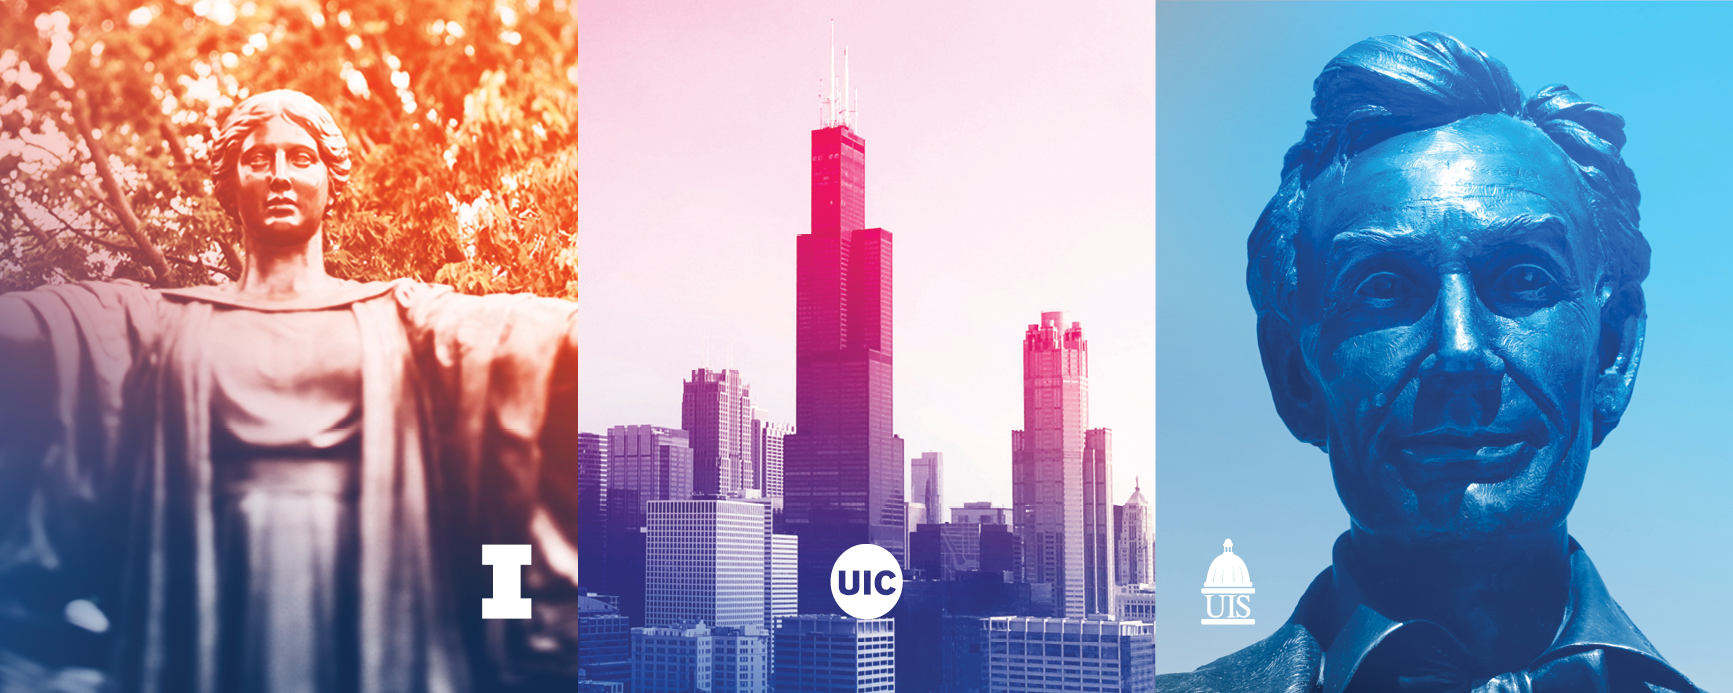 Alma Mater, Chicago Skyline, Lincoln bust - university logos